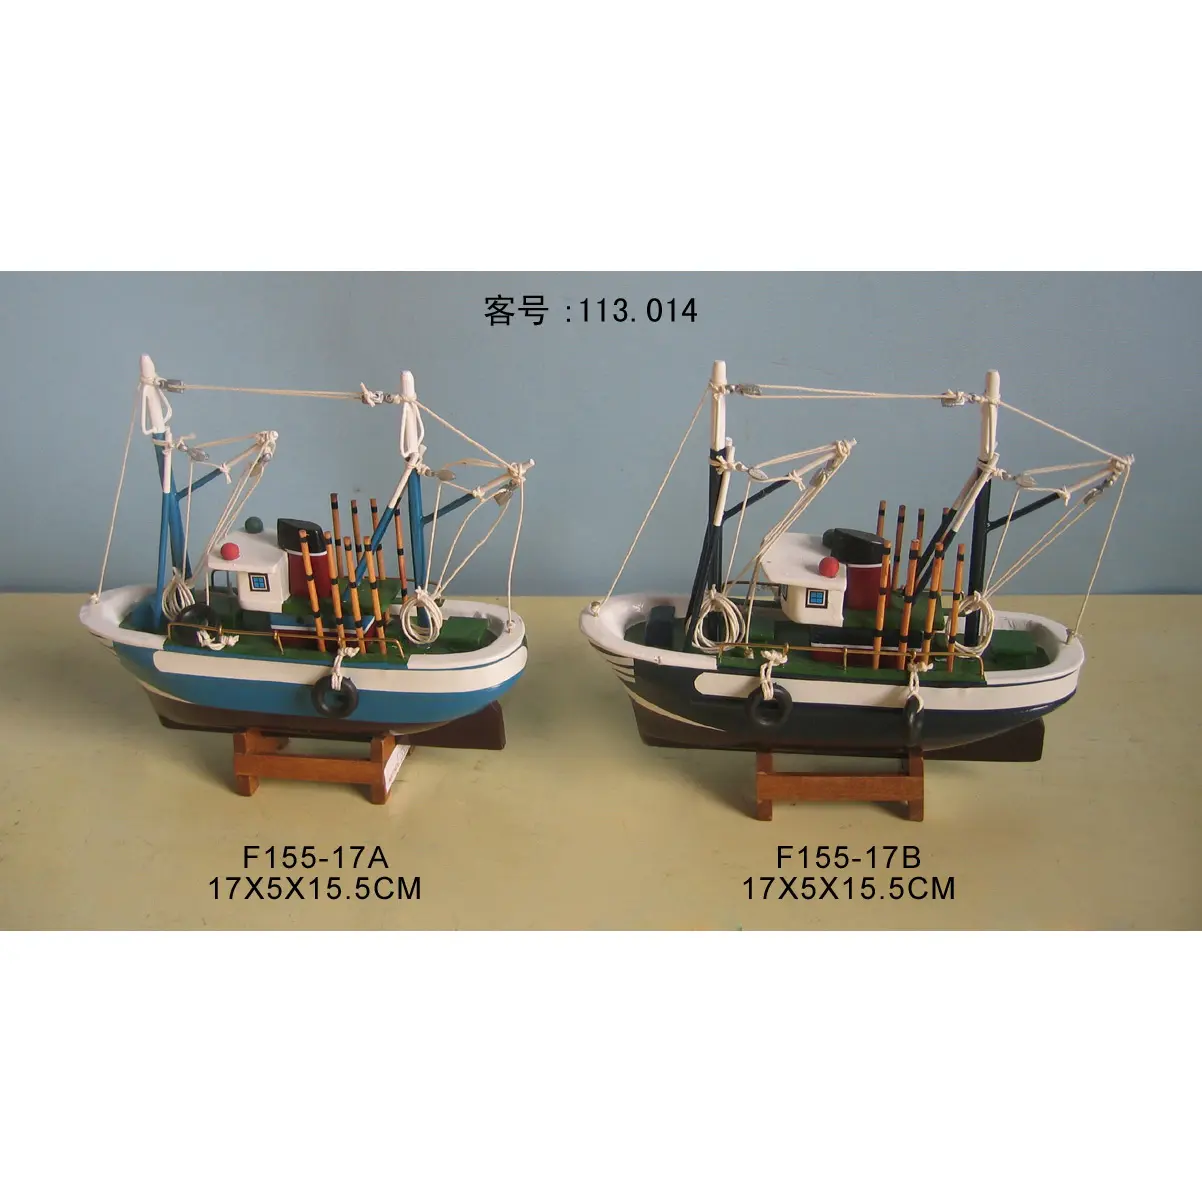 Small wooden fishing ship model,2 sets 17x5x15.5 cm, nautical boat model